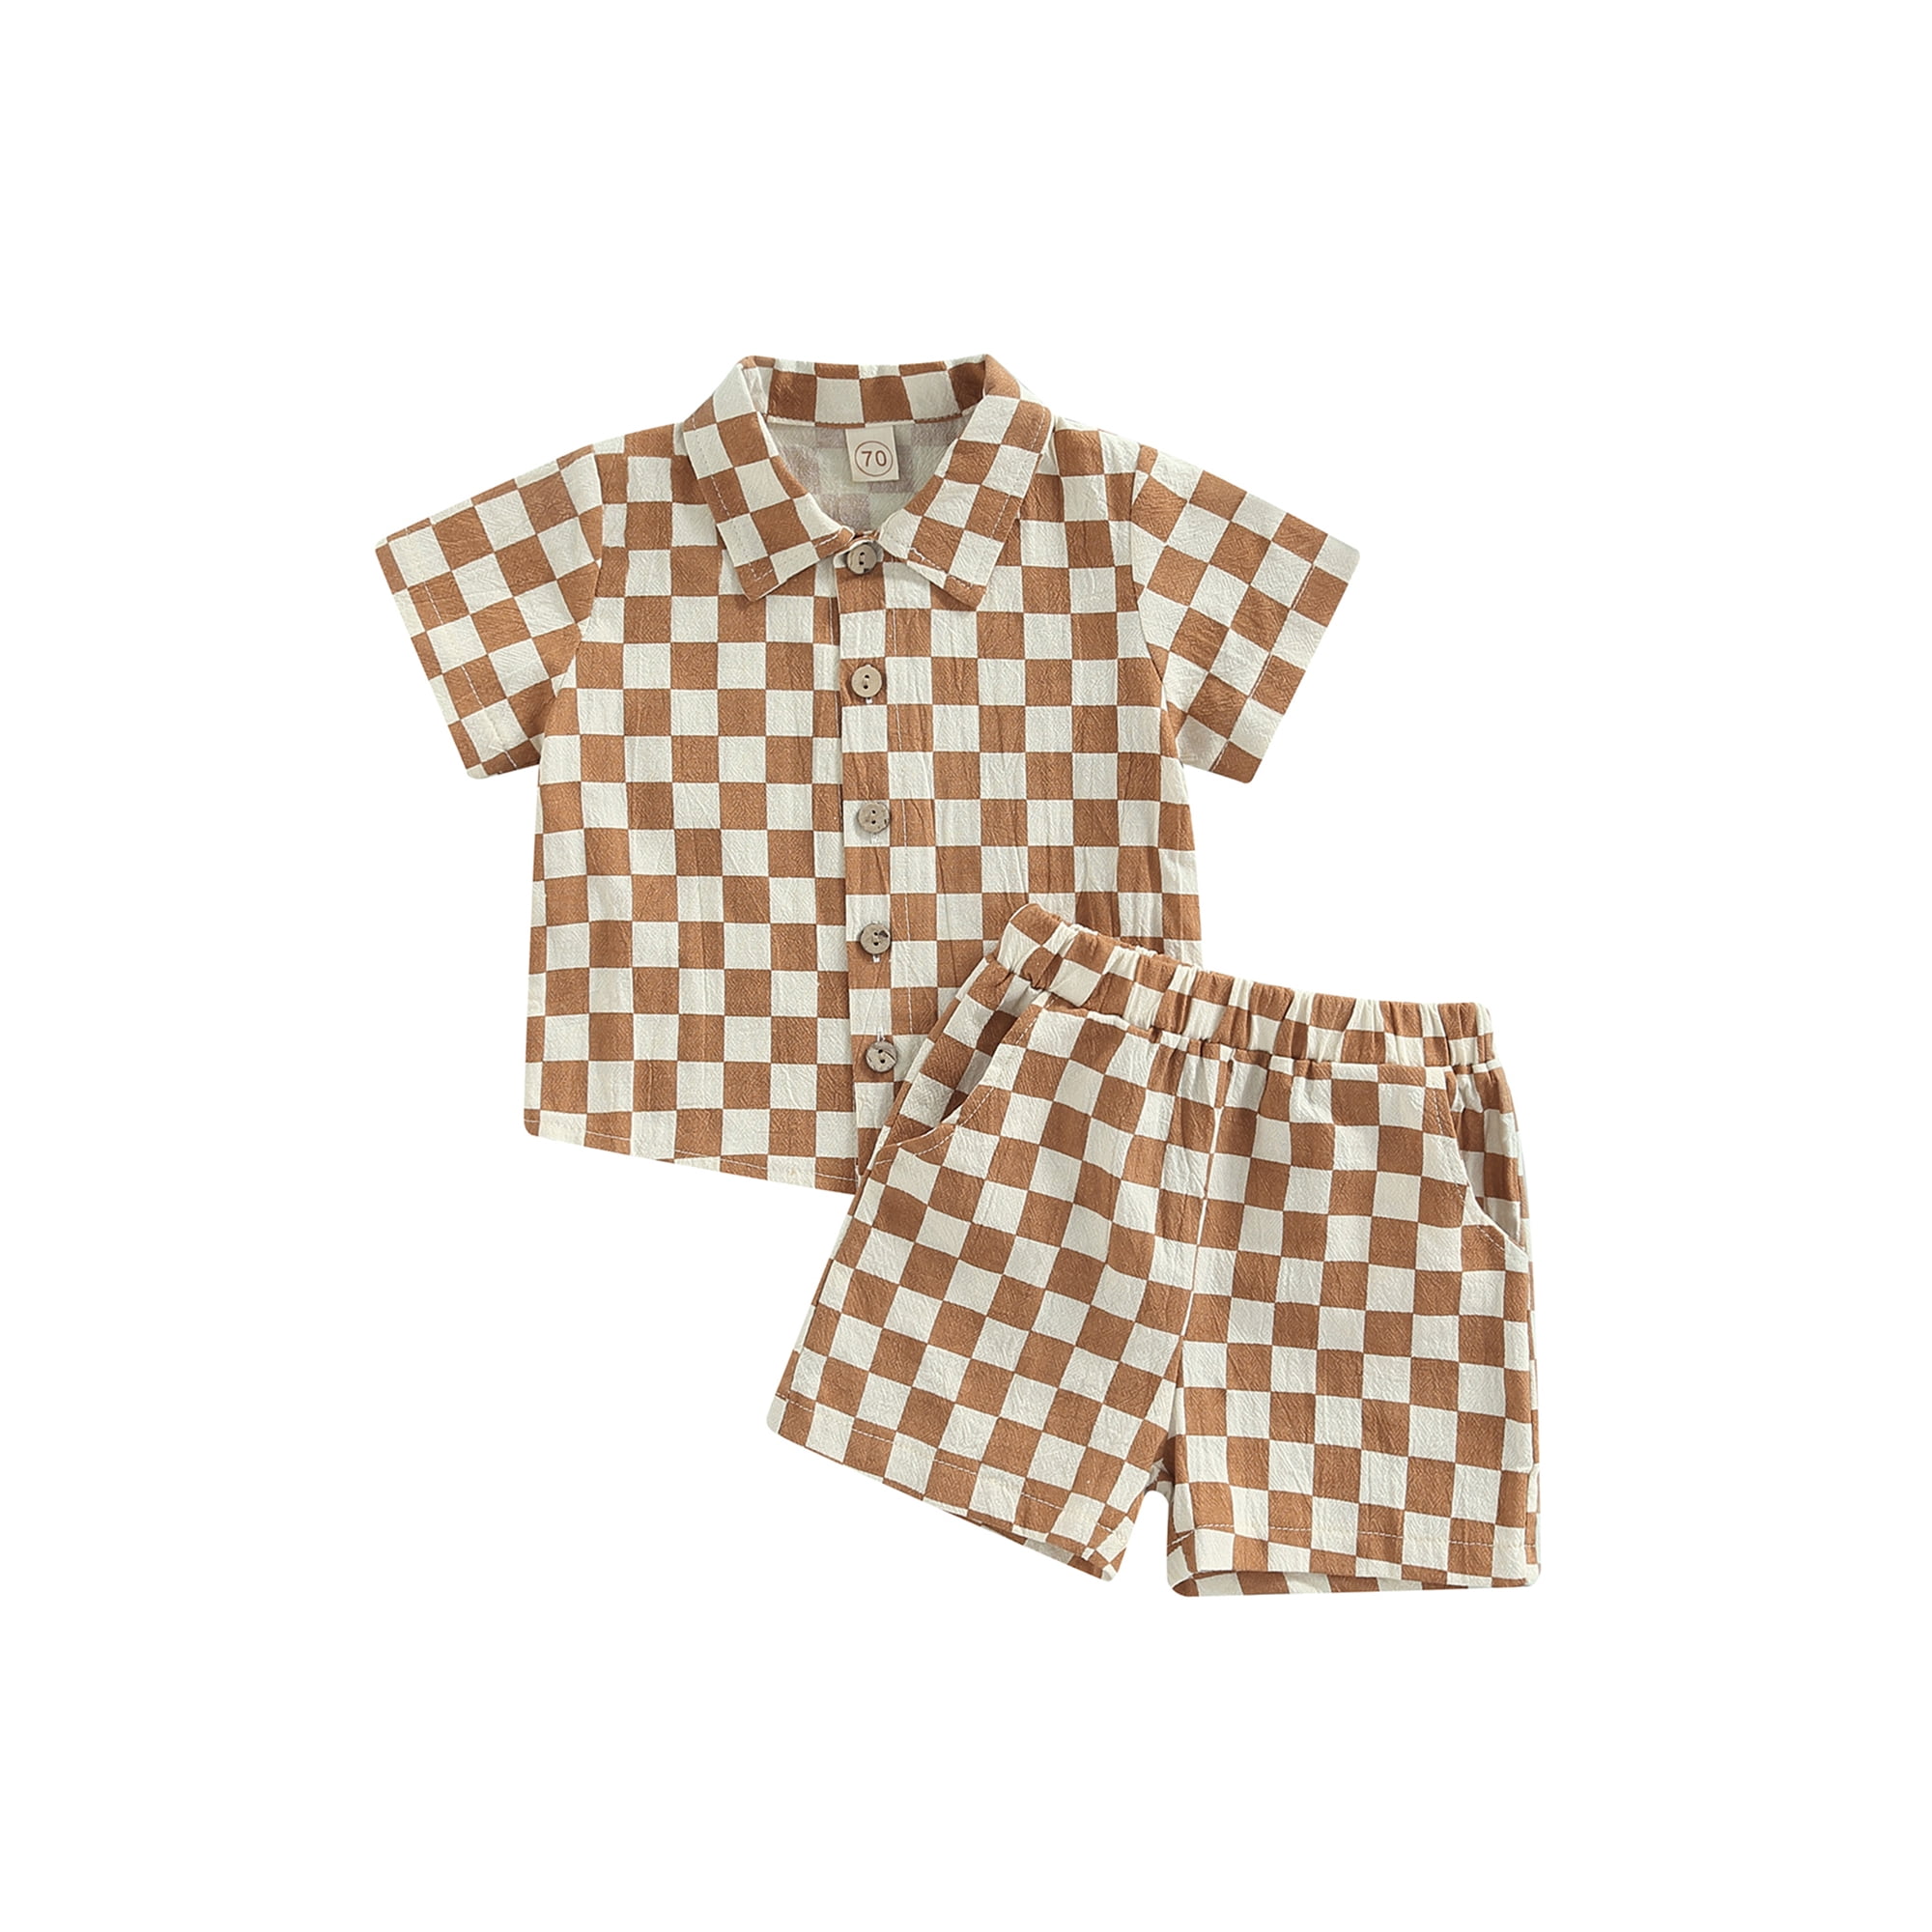 Gupgi Baby Boy Brown Plaid Outfits Set, Summer Short Sleeve Button Down T-Shirts Shorts 2pcs Set 0-24 Months Brown 6-12 Months